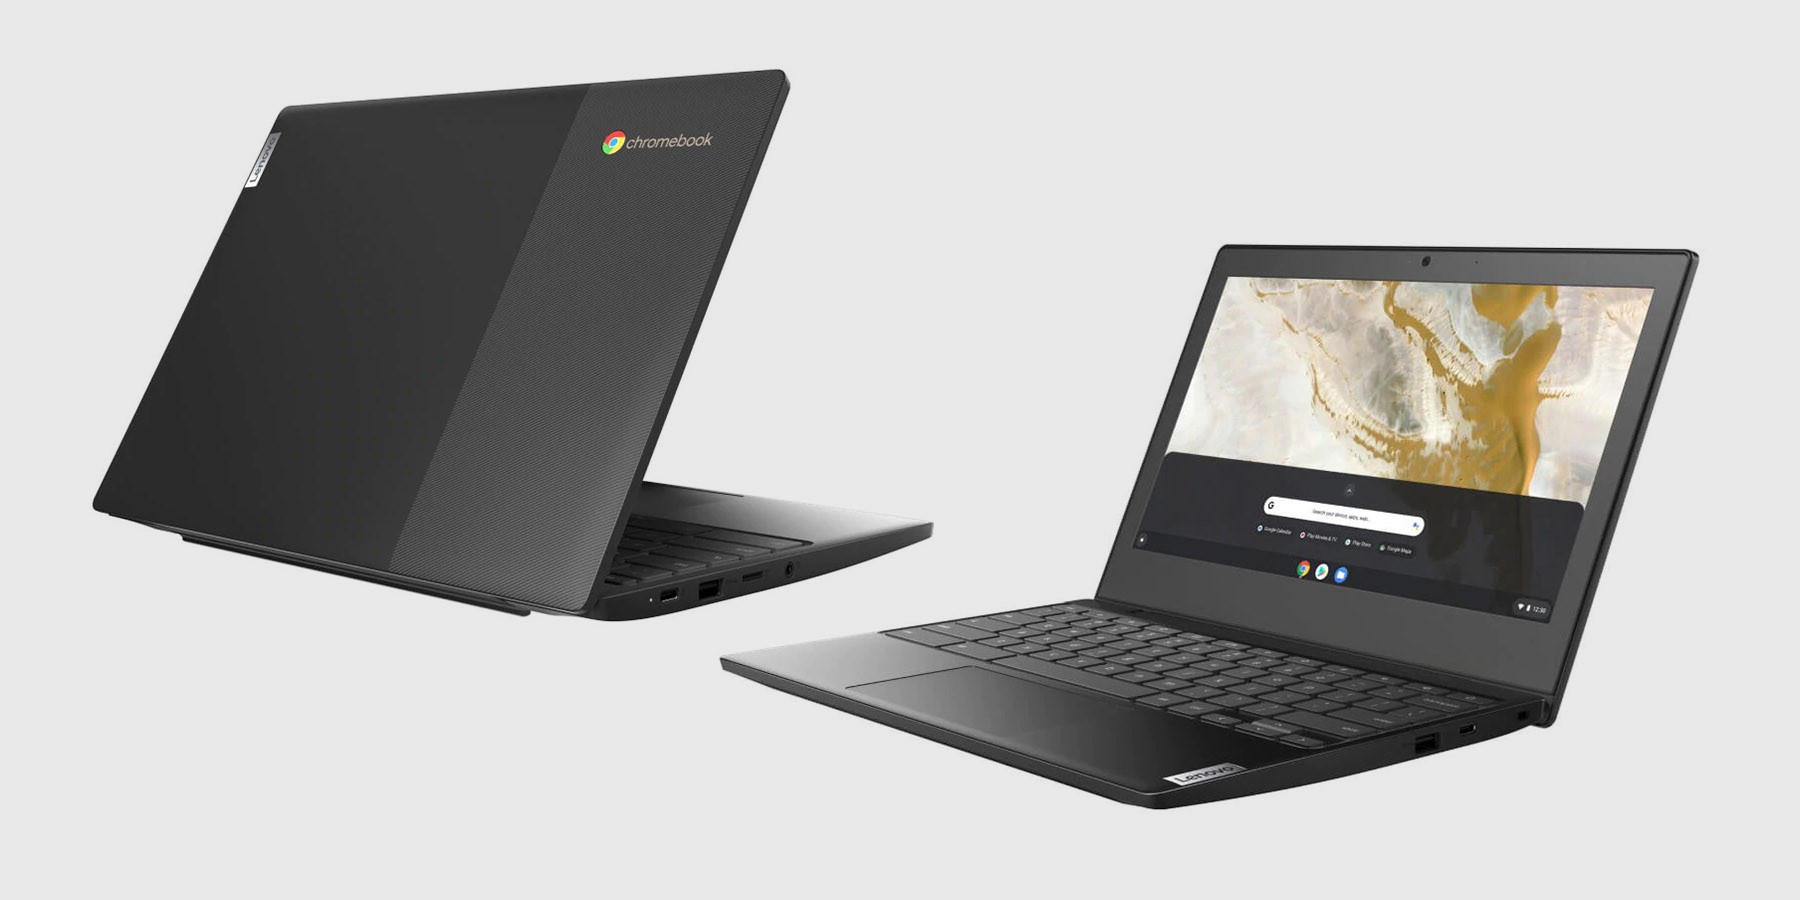 Представлен Lenovo Chromebook 3 — маленький хромбук за 230 долларов